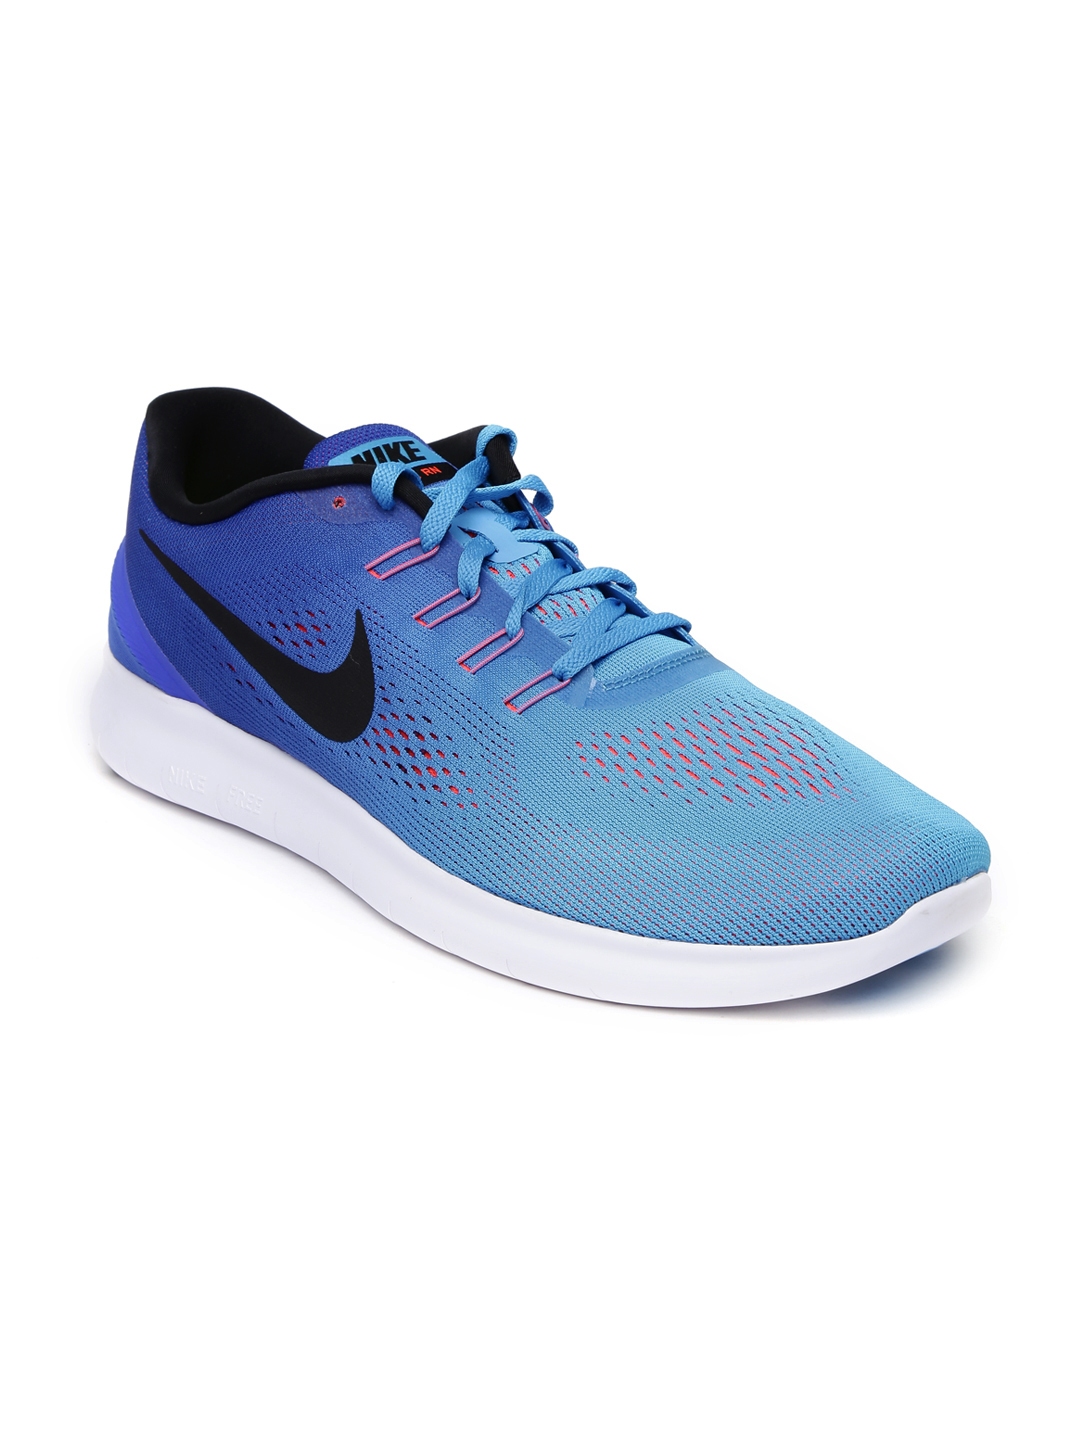 Buy Nike Men Blue Free RN Running Shoes - Sports Shoes for Men 1420970 ...